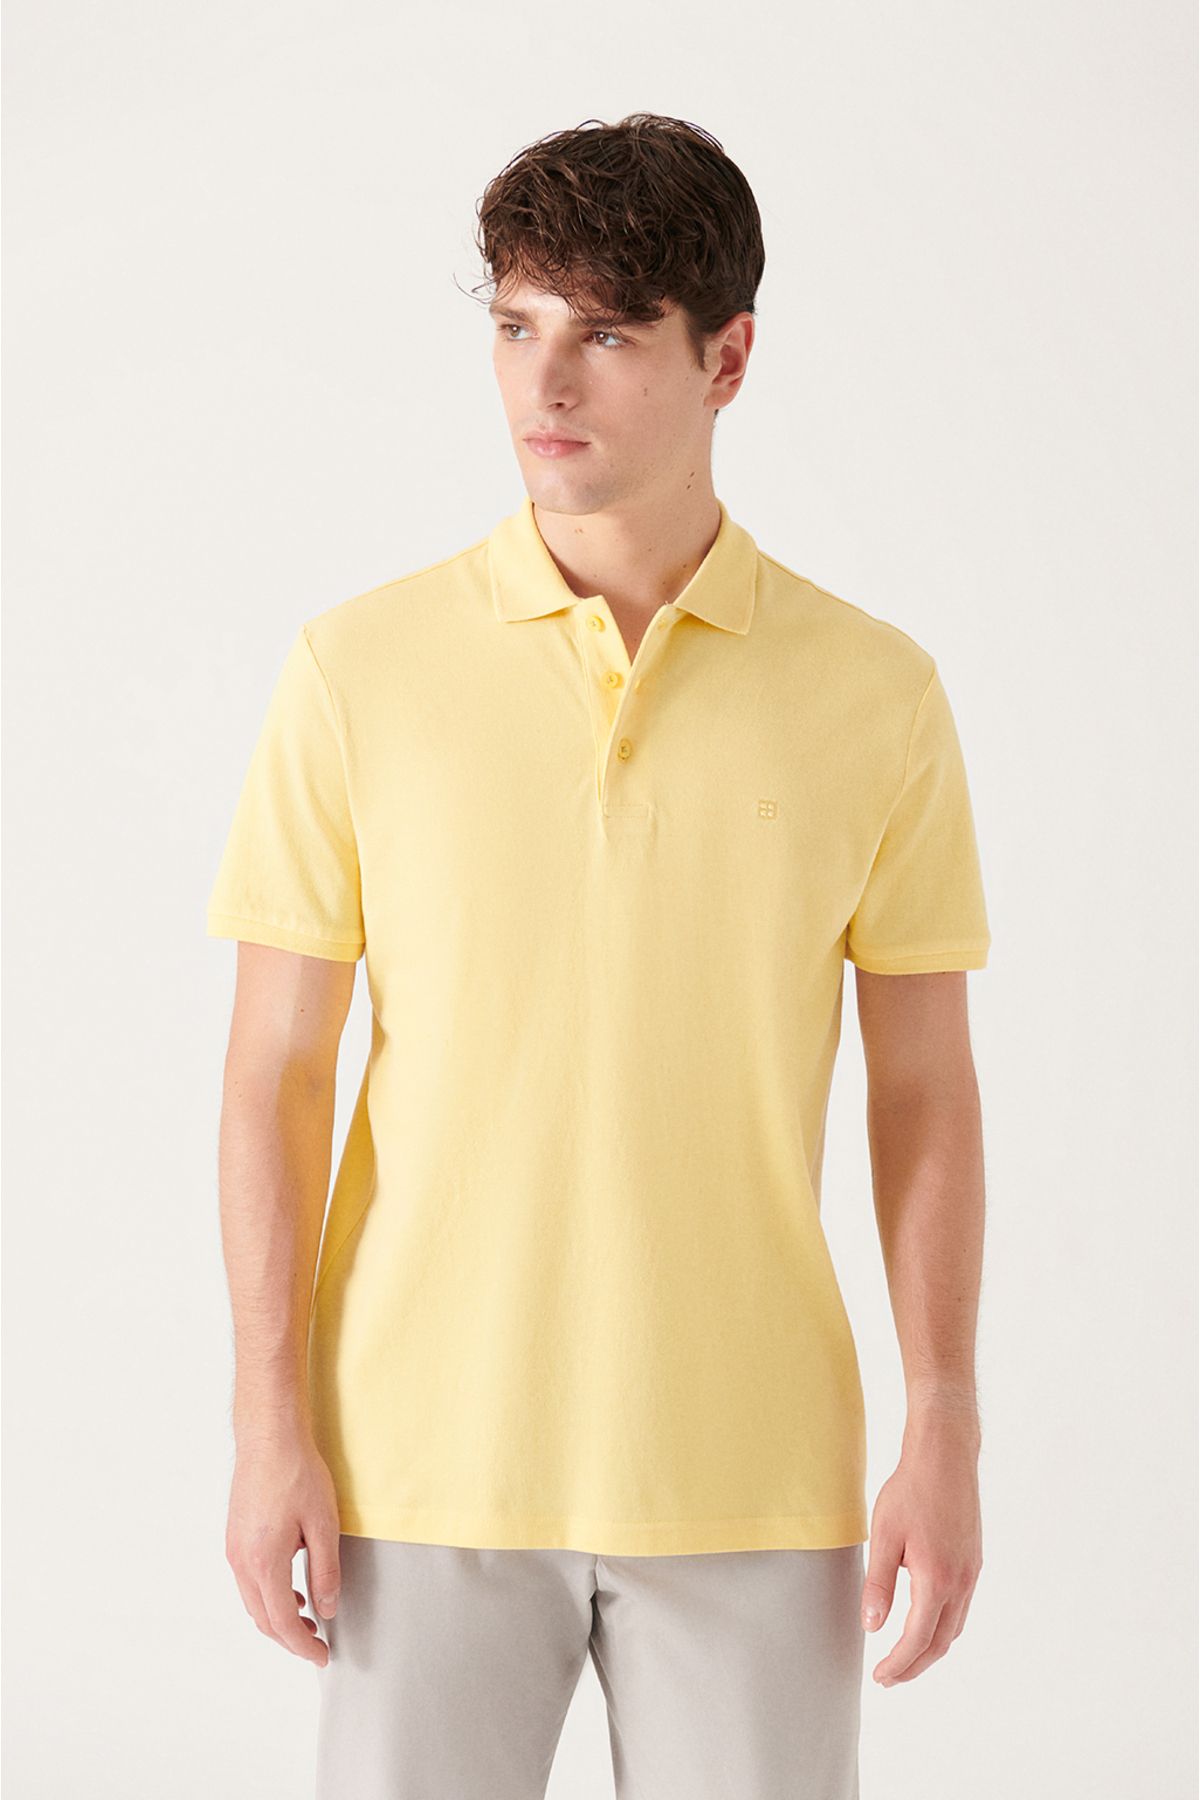 Avva تی شرت مردانه زرد 100% پنبه ای خنک با تناسب استاندارد برش معمولی یقه پولو E001004